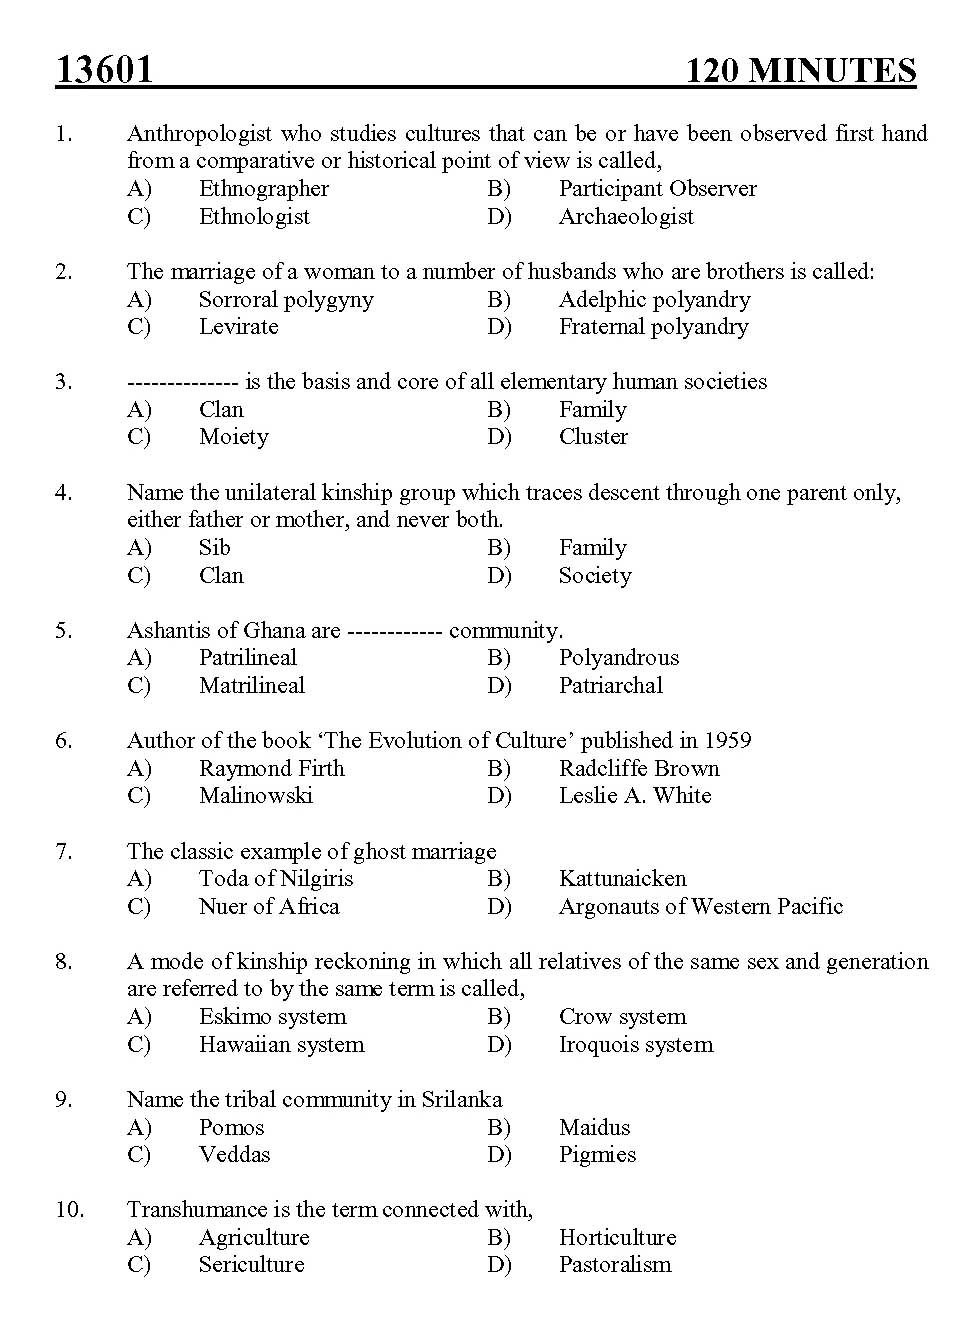 Kerala SET Anthropology Exam 2013 Question Code 13601 1